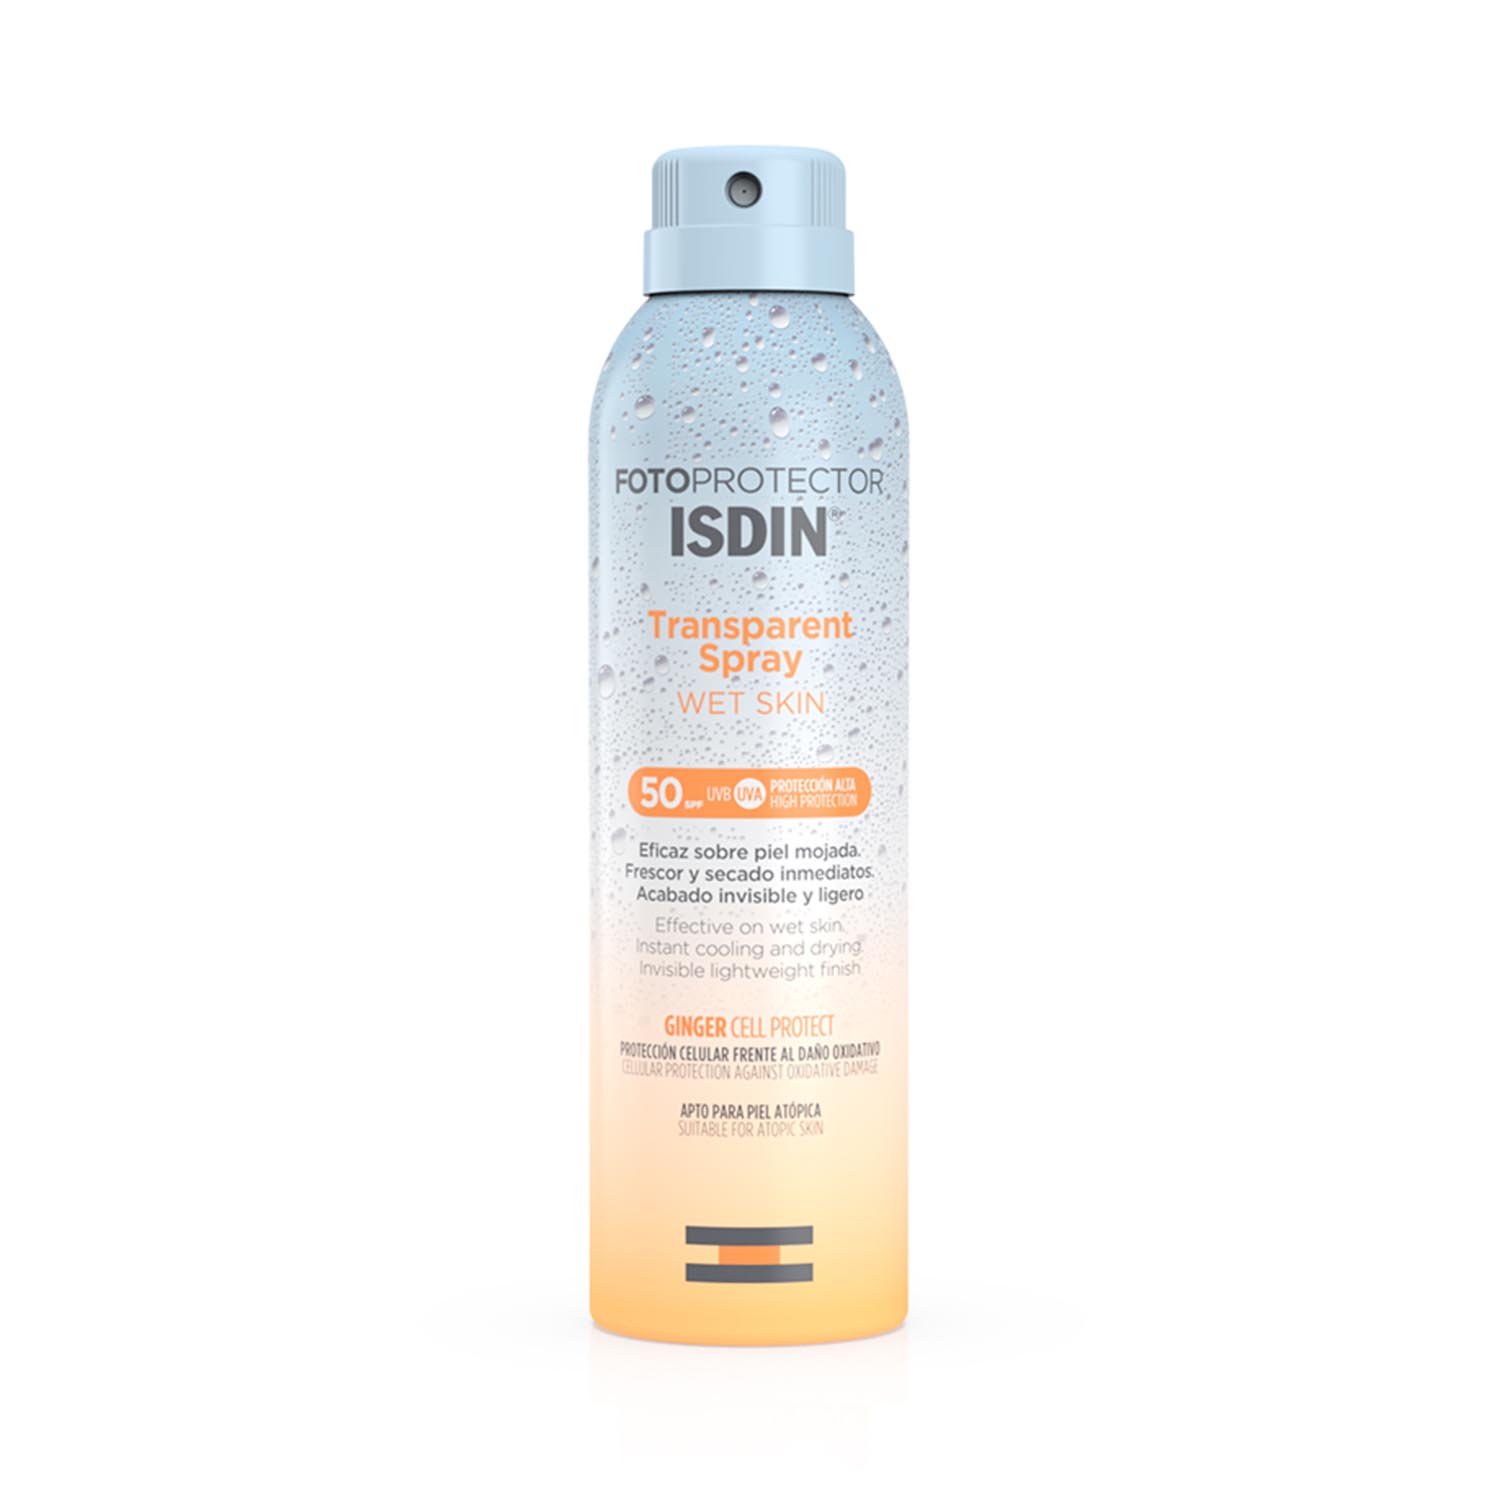 fotoprotector isdin 50+ transparent spray wet skin (protector solar corporal en spray)